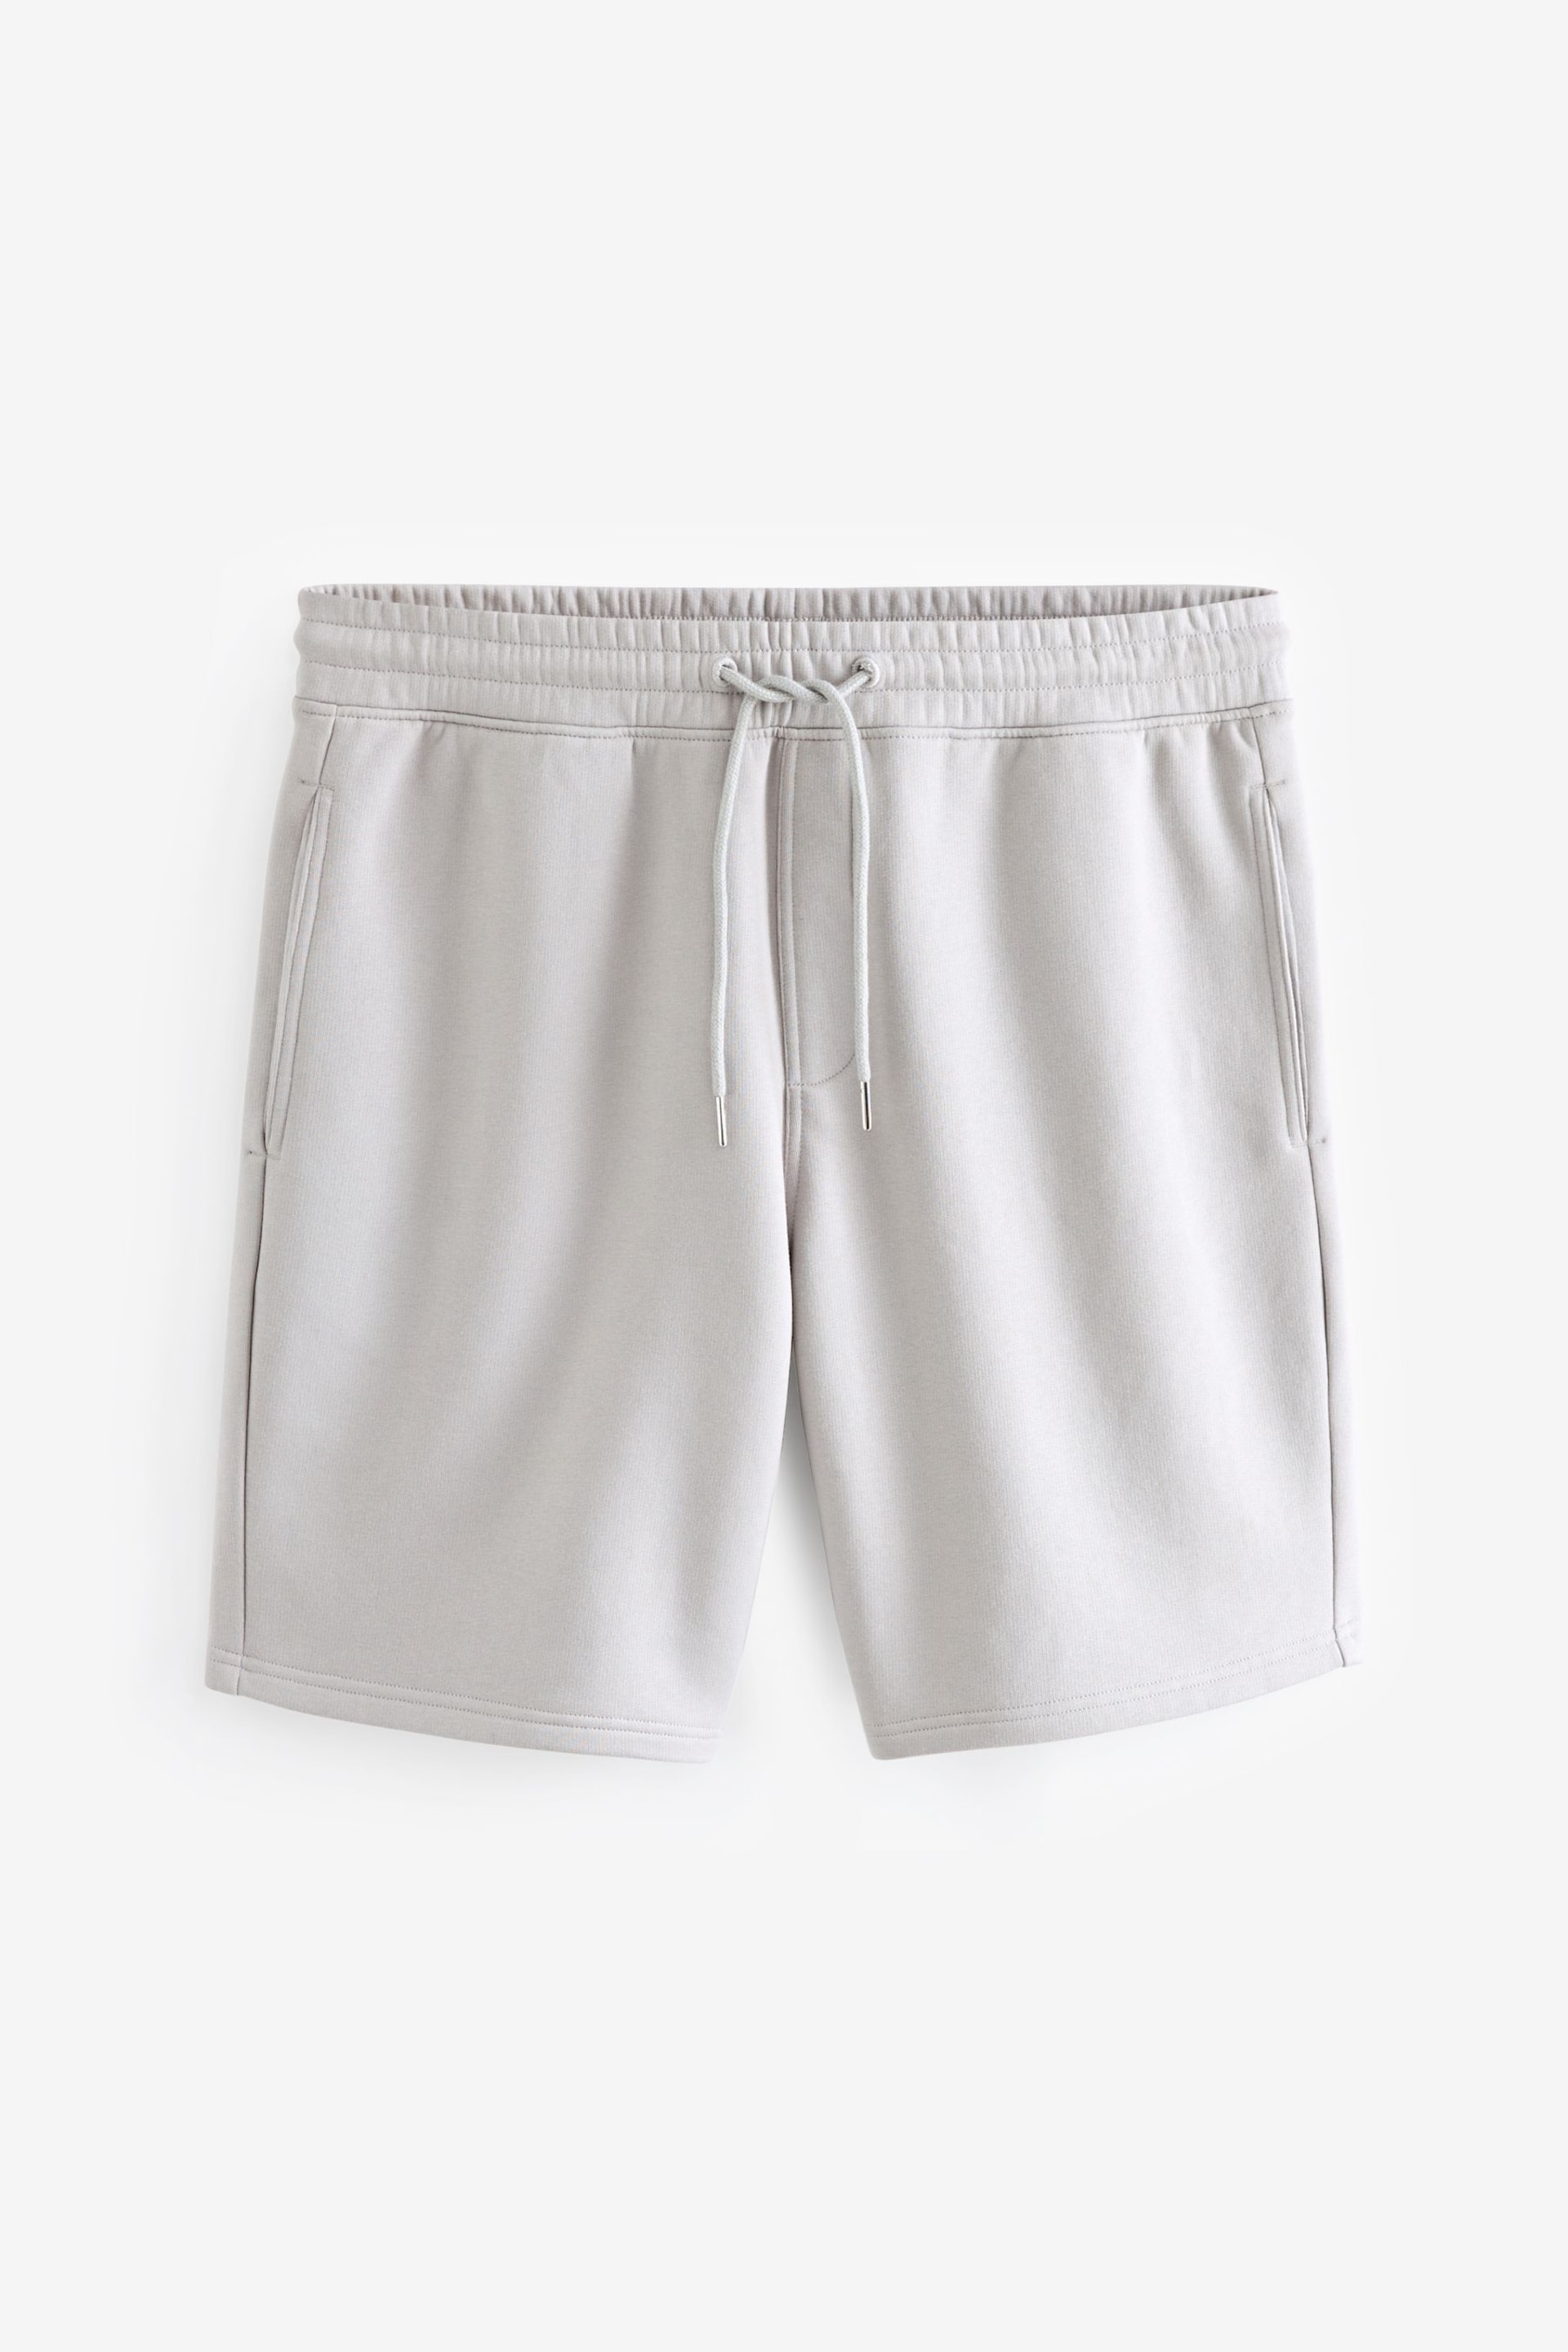 Light Grey Soft Fabric Jersey Shorts - Image 6 of 10